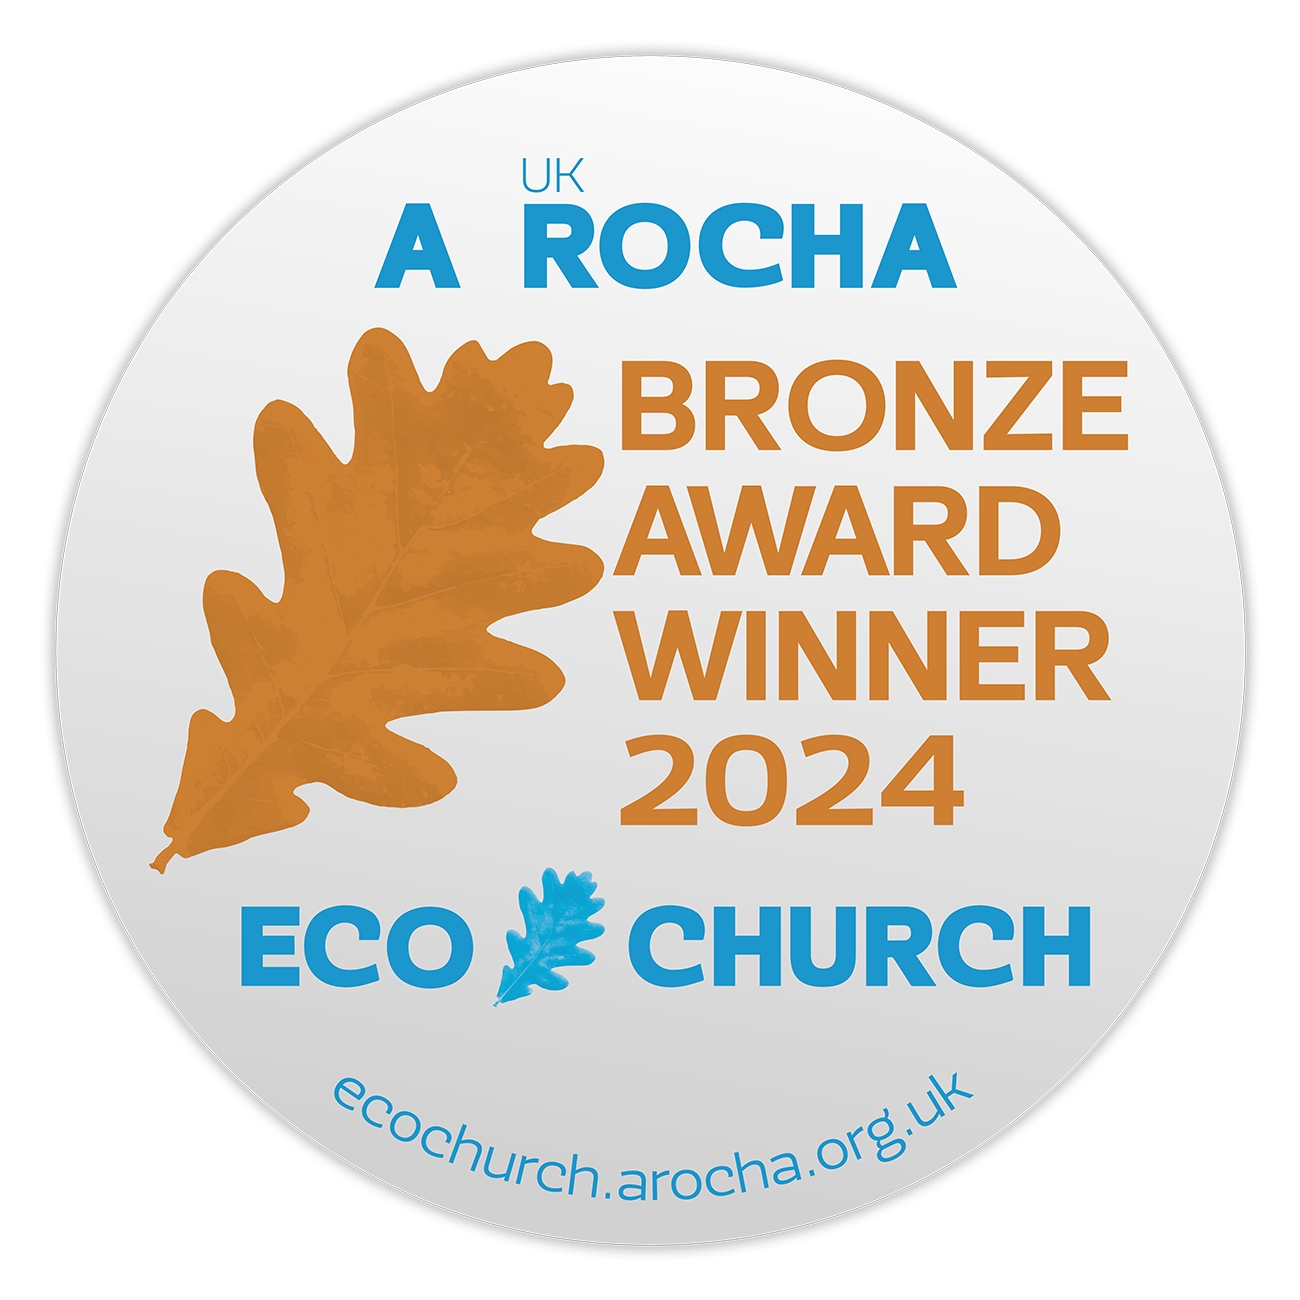 Eco church logo